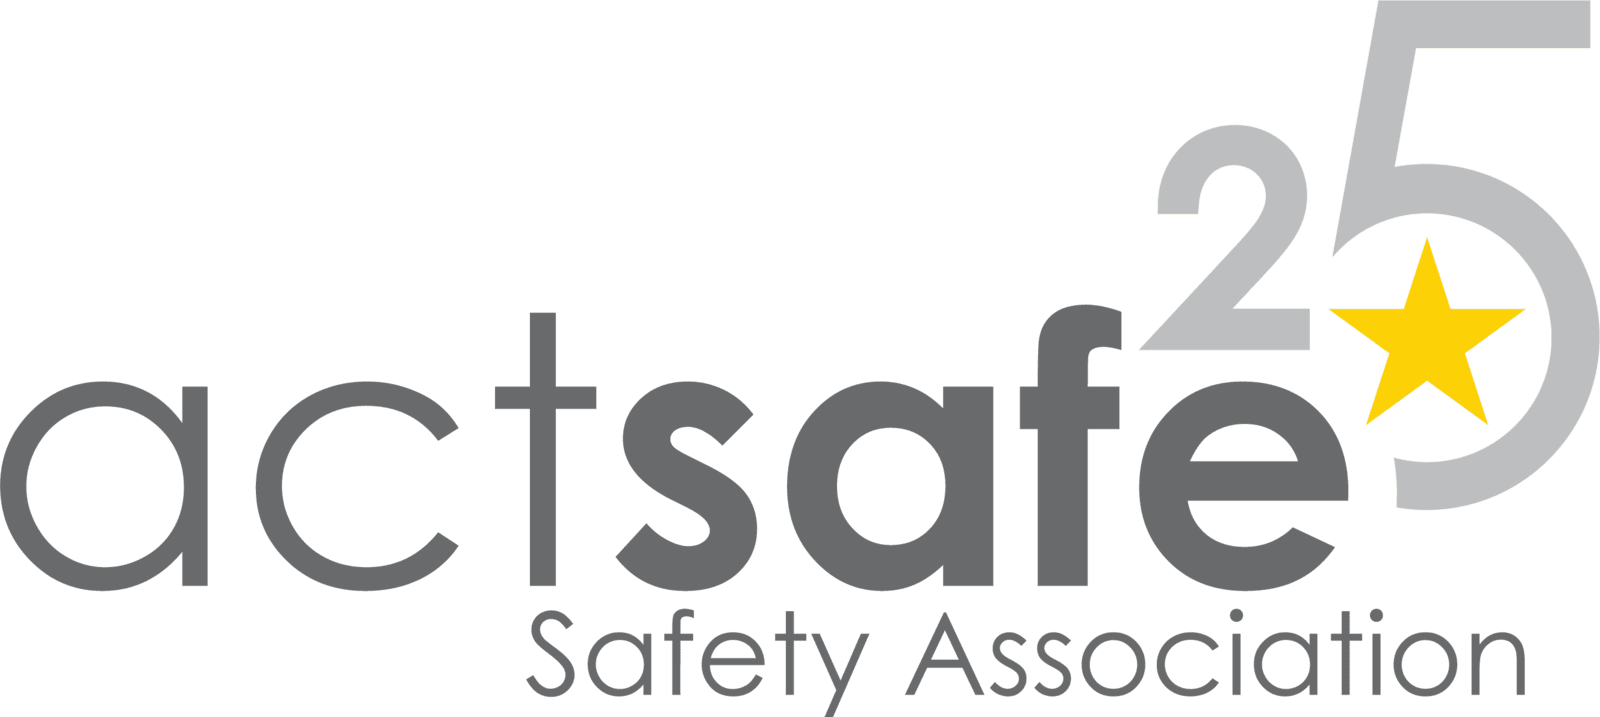 Actsafe Safety Association logo